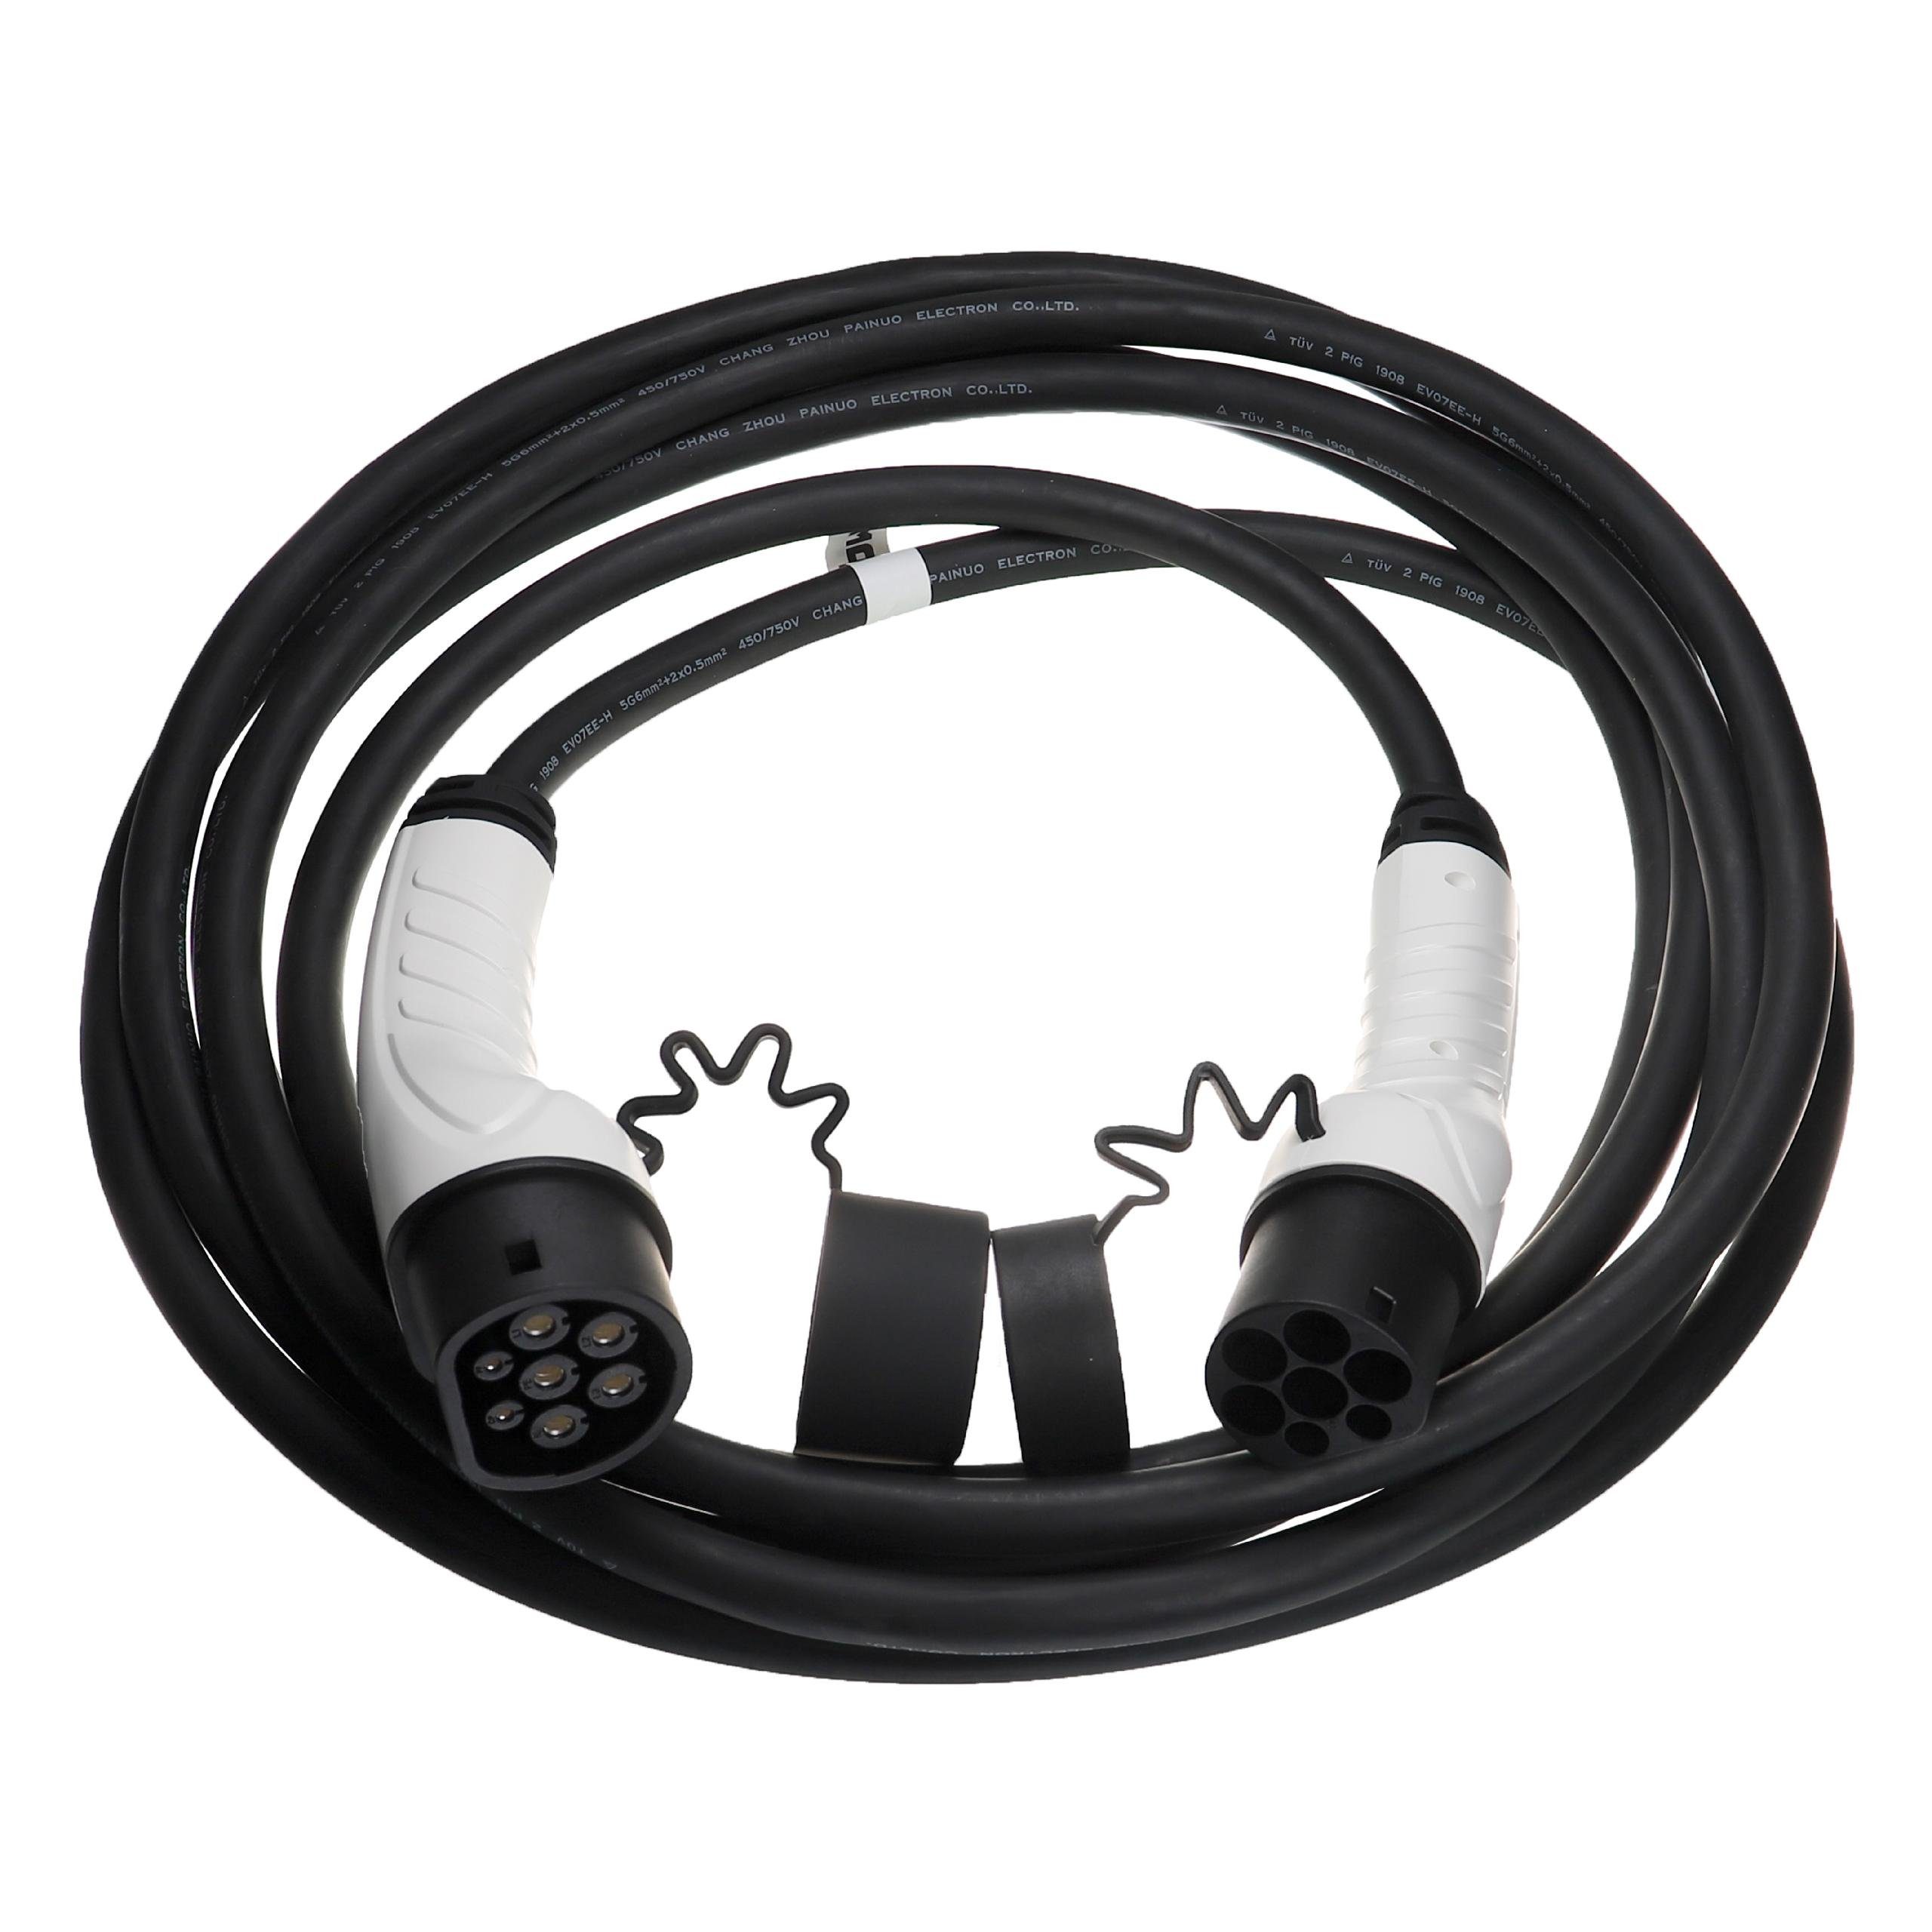 Elektro-Kabel passend Elektroauto Plug-in-Hybrid / vhbw 1 Polestar für 2,